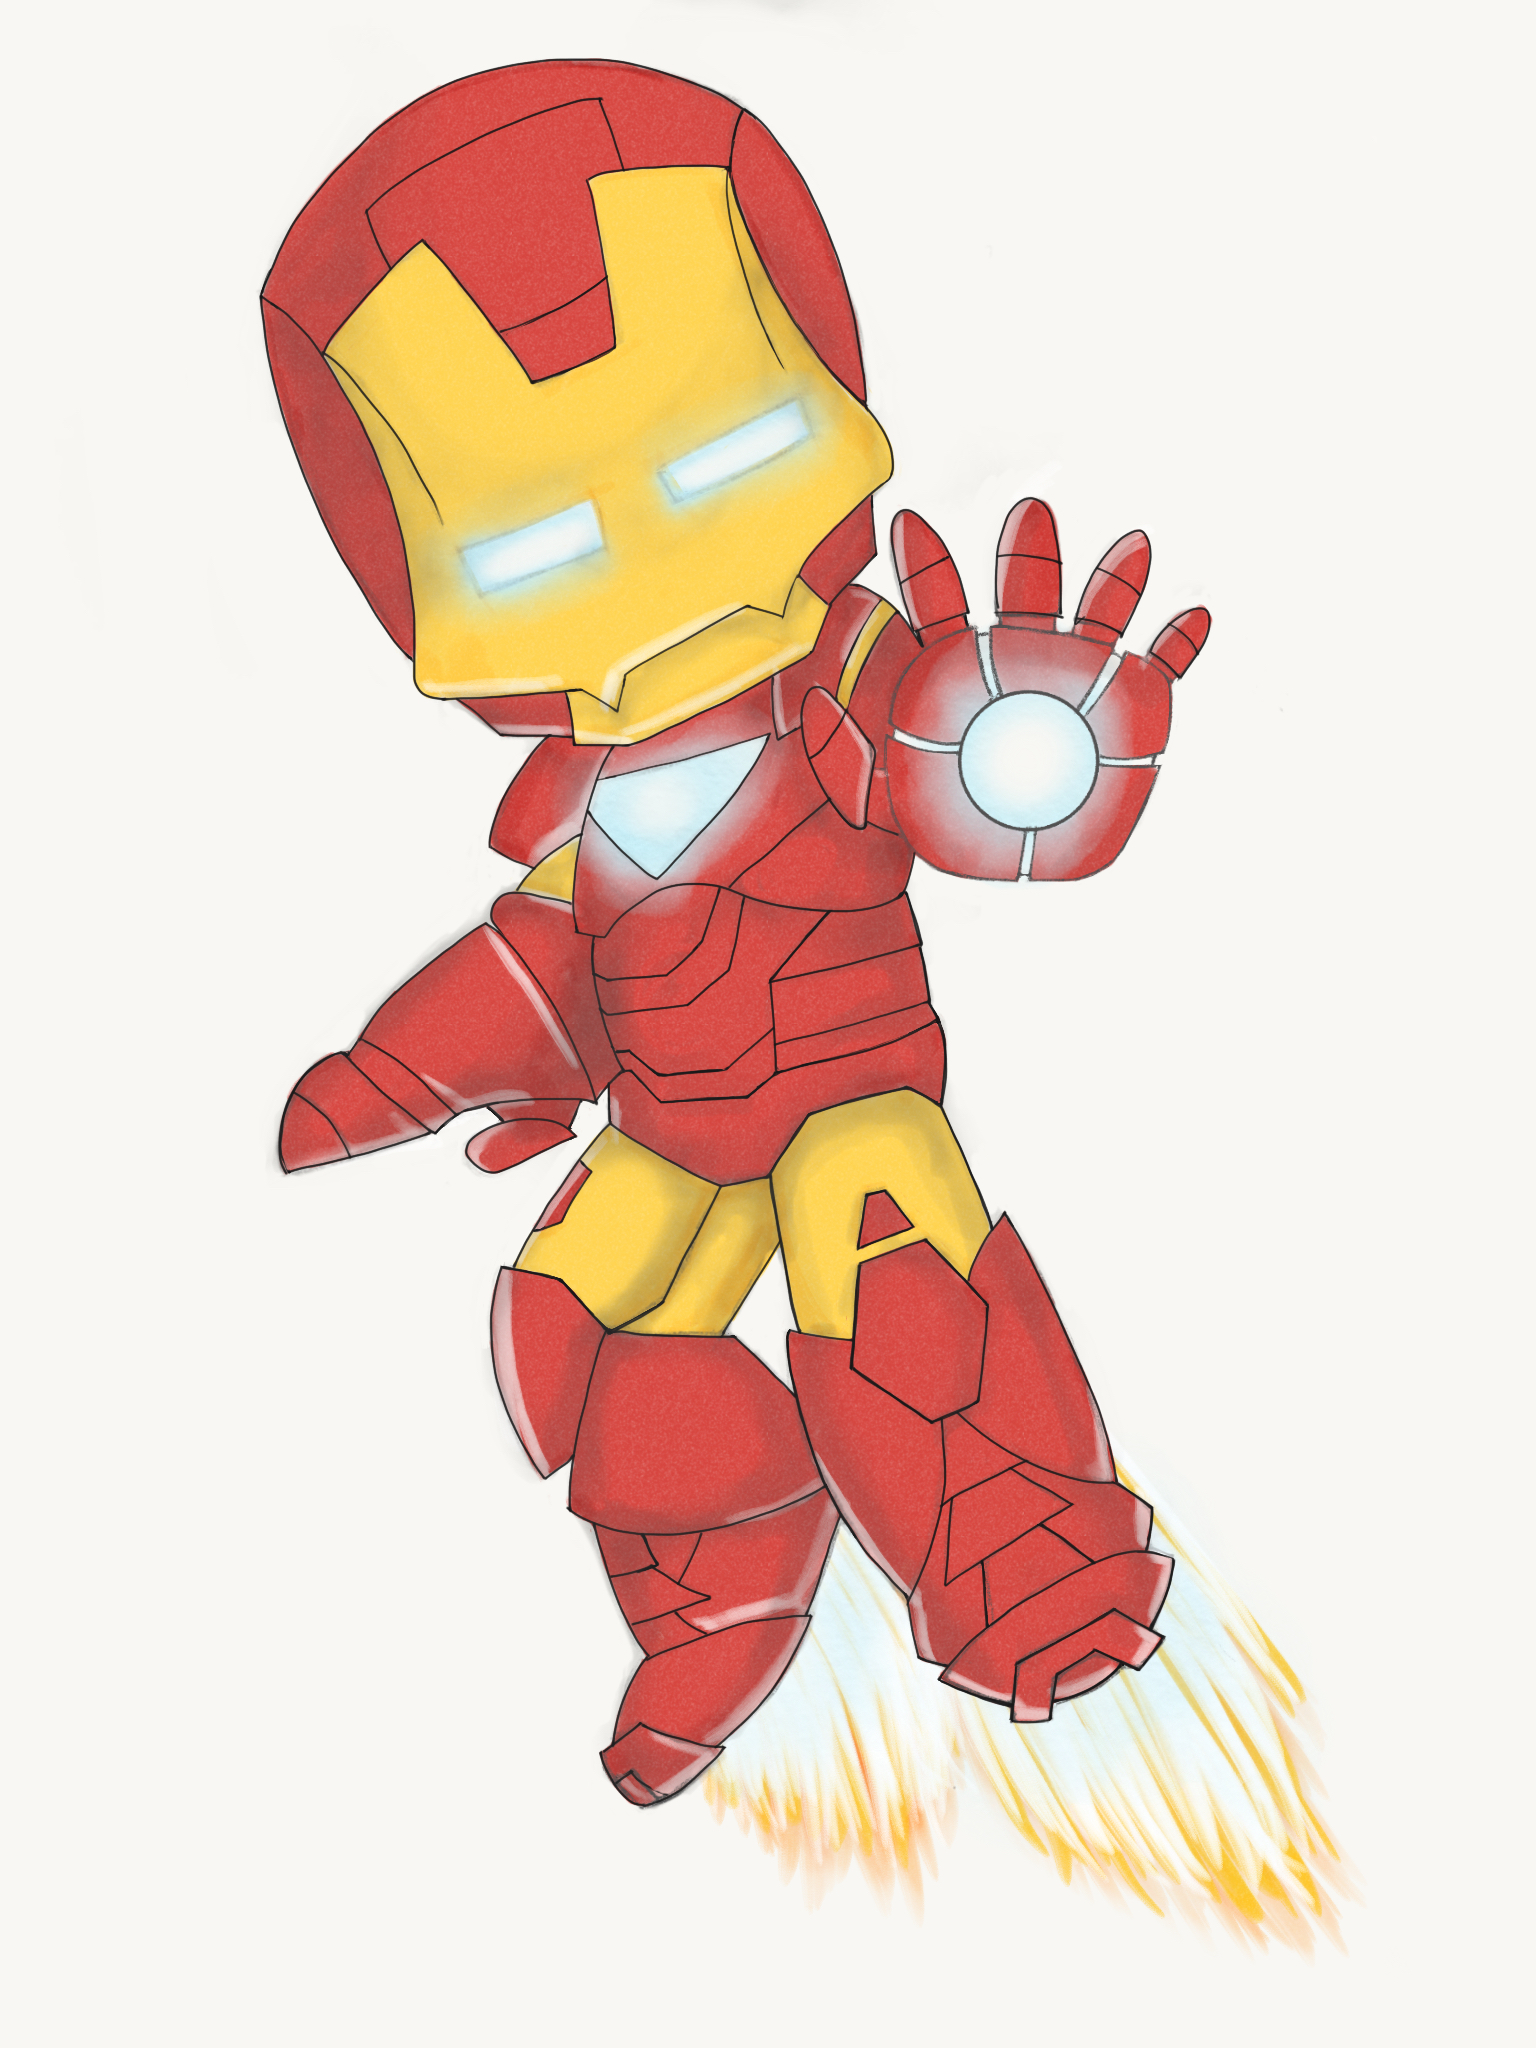 Iron Man Baby Variant on Behance